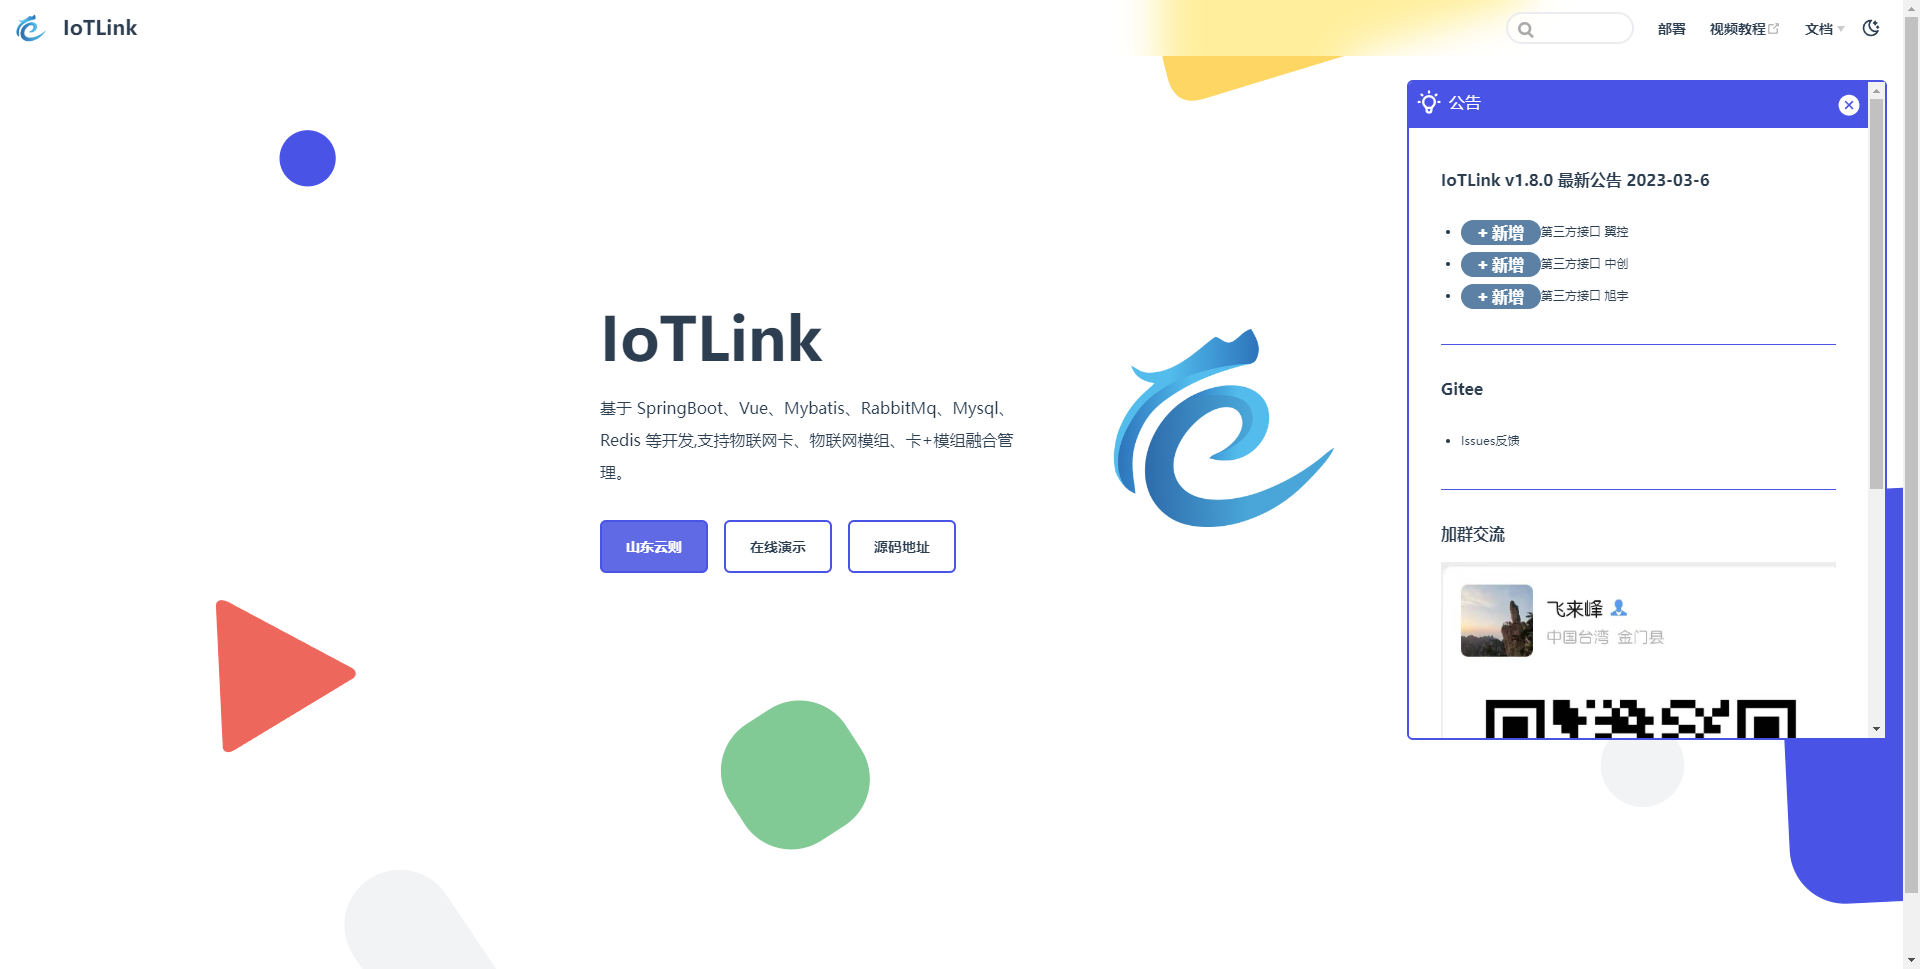 IoTLink 版本更新 v1.8.0